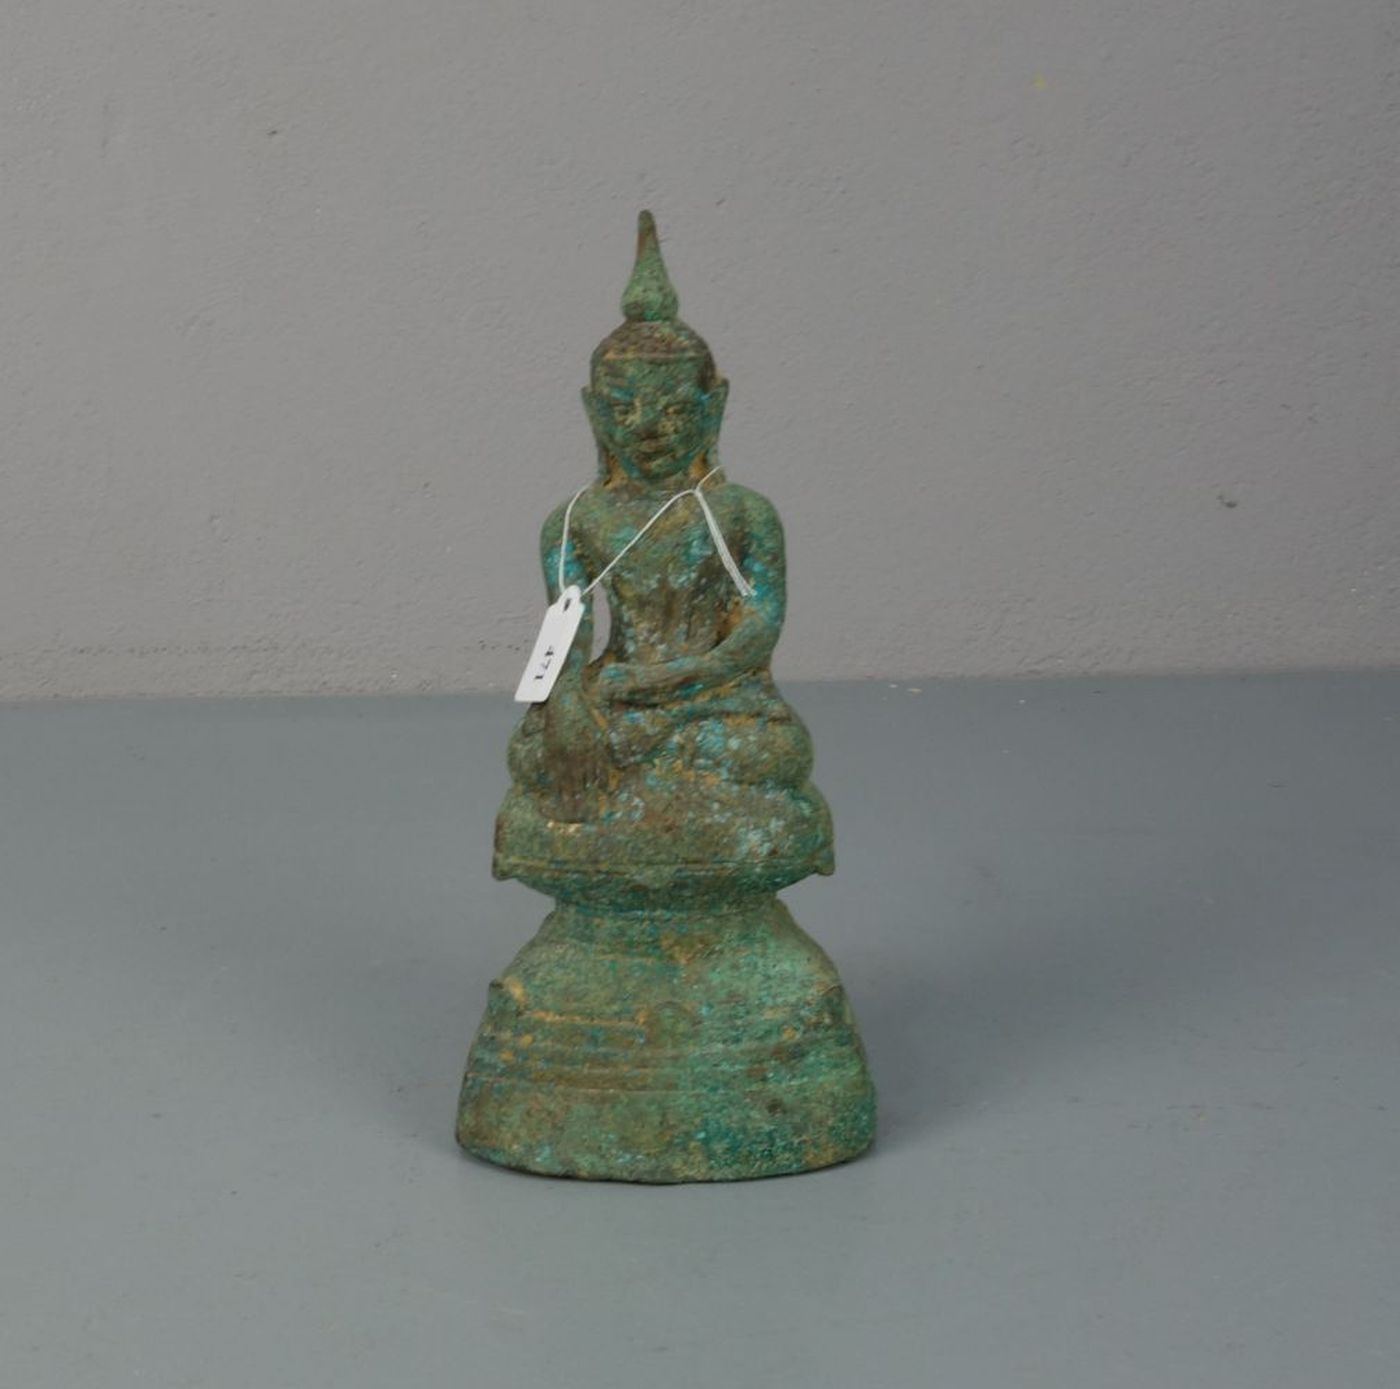 SKULPTUR / sculpture: "Buddha", Bronze, grün patiniert, Burma, Shan-Zeit (Tai Yai, 1315-1948, wohl